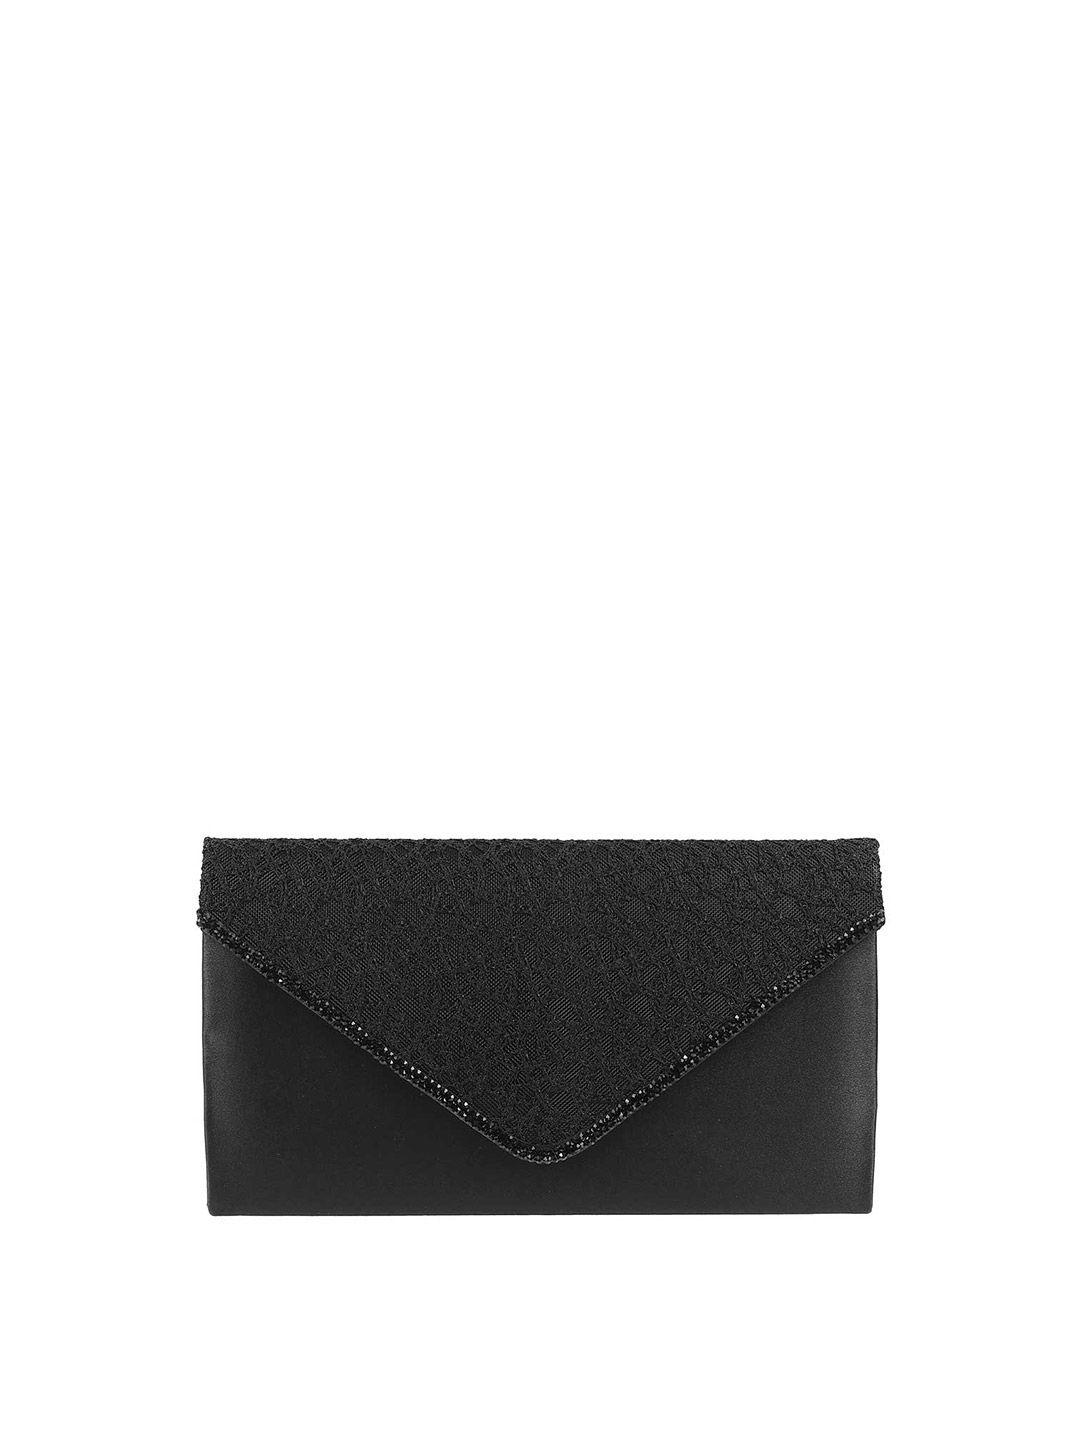 mochi black embellished purse clutch